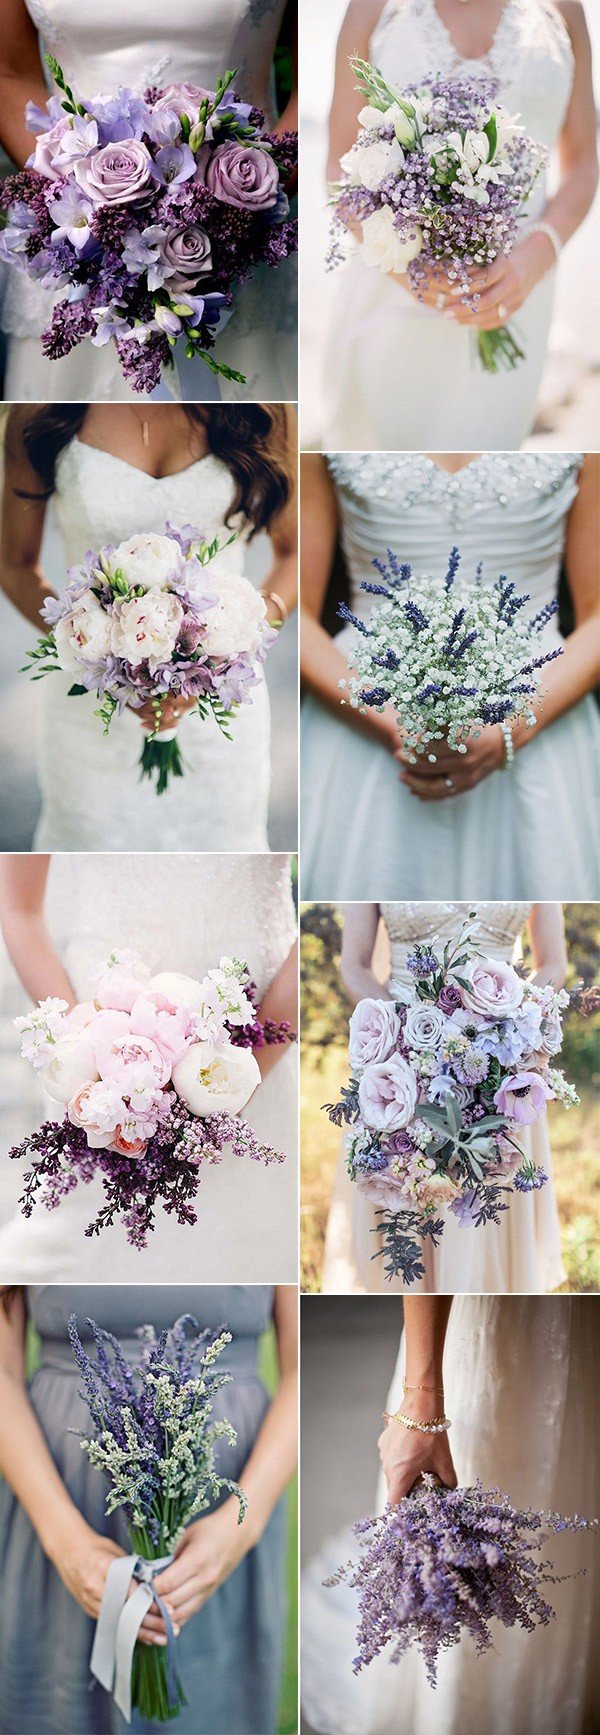 lavender themed wedding bouquet ideas